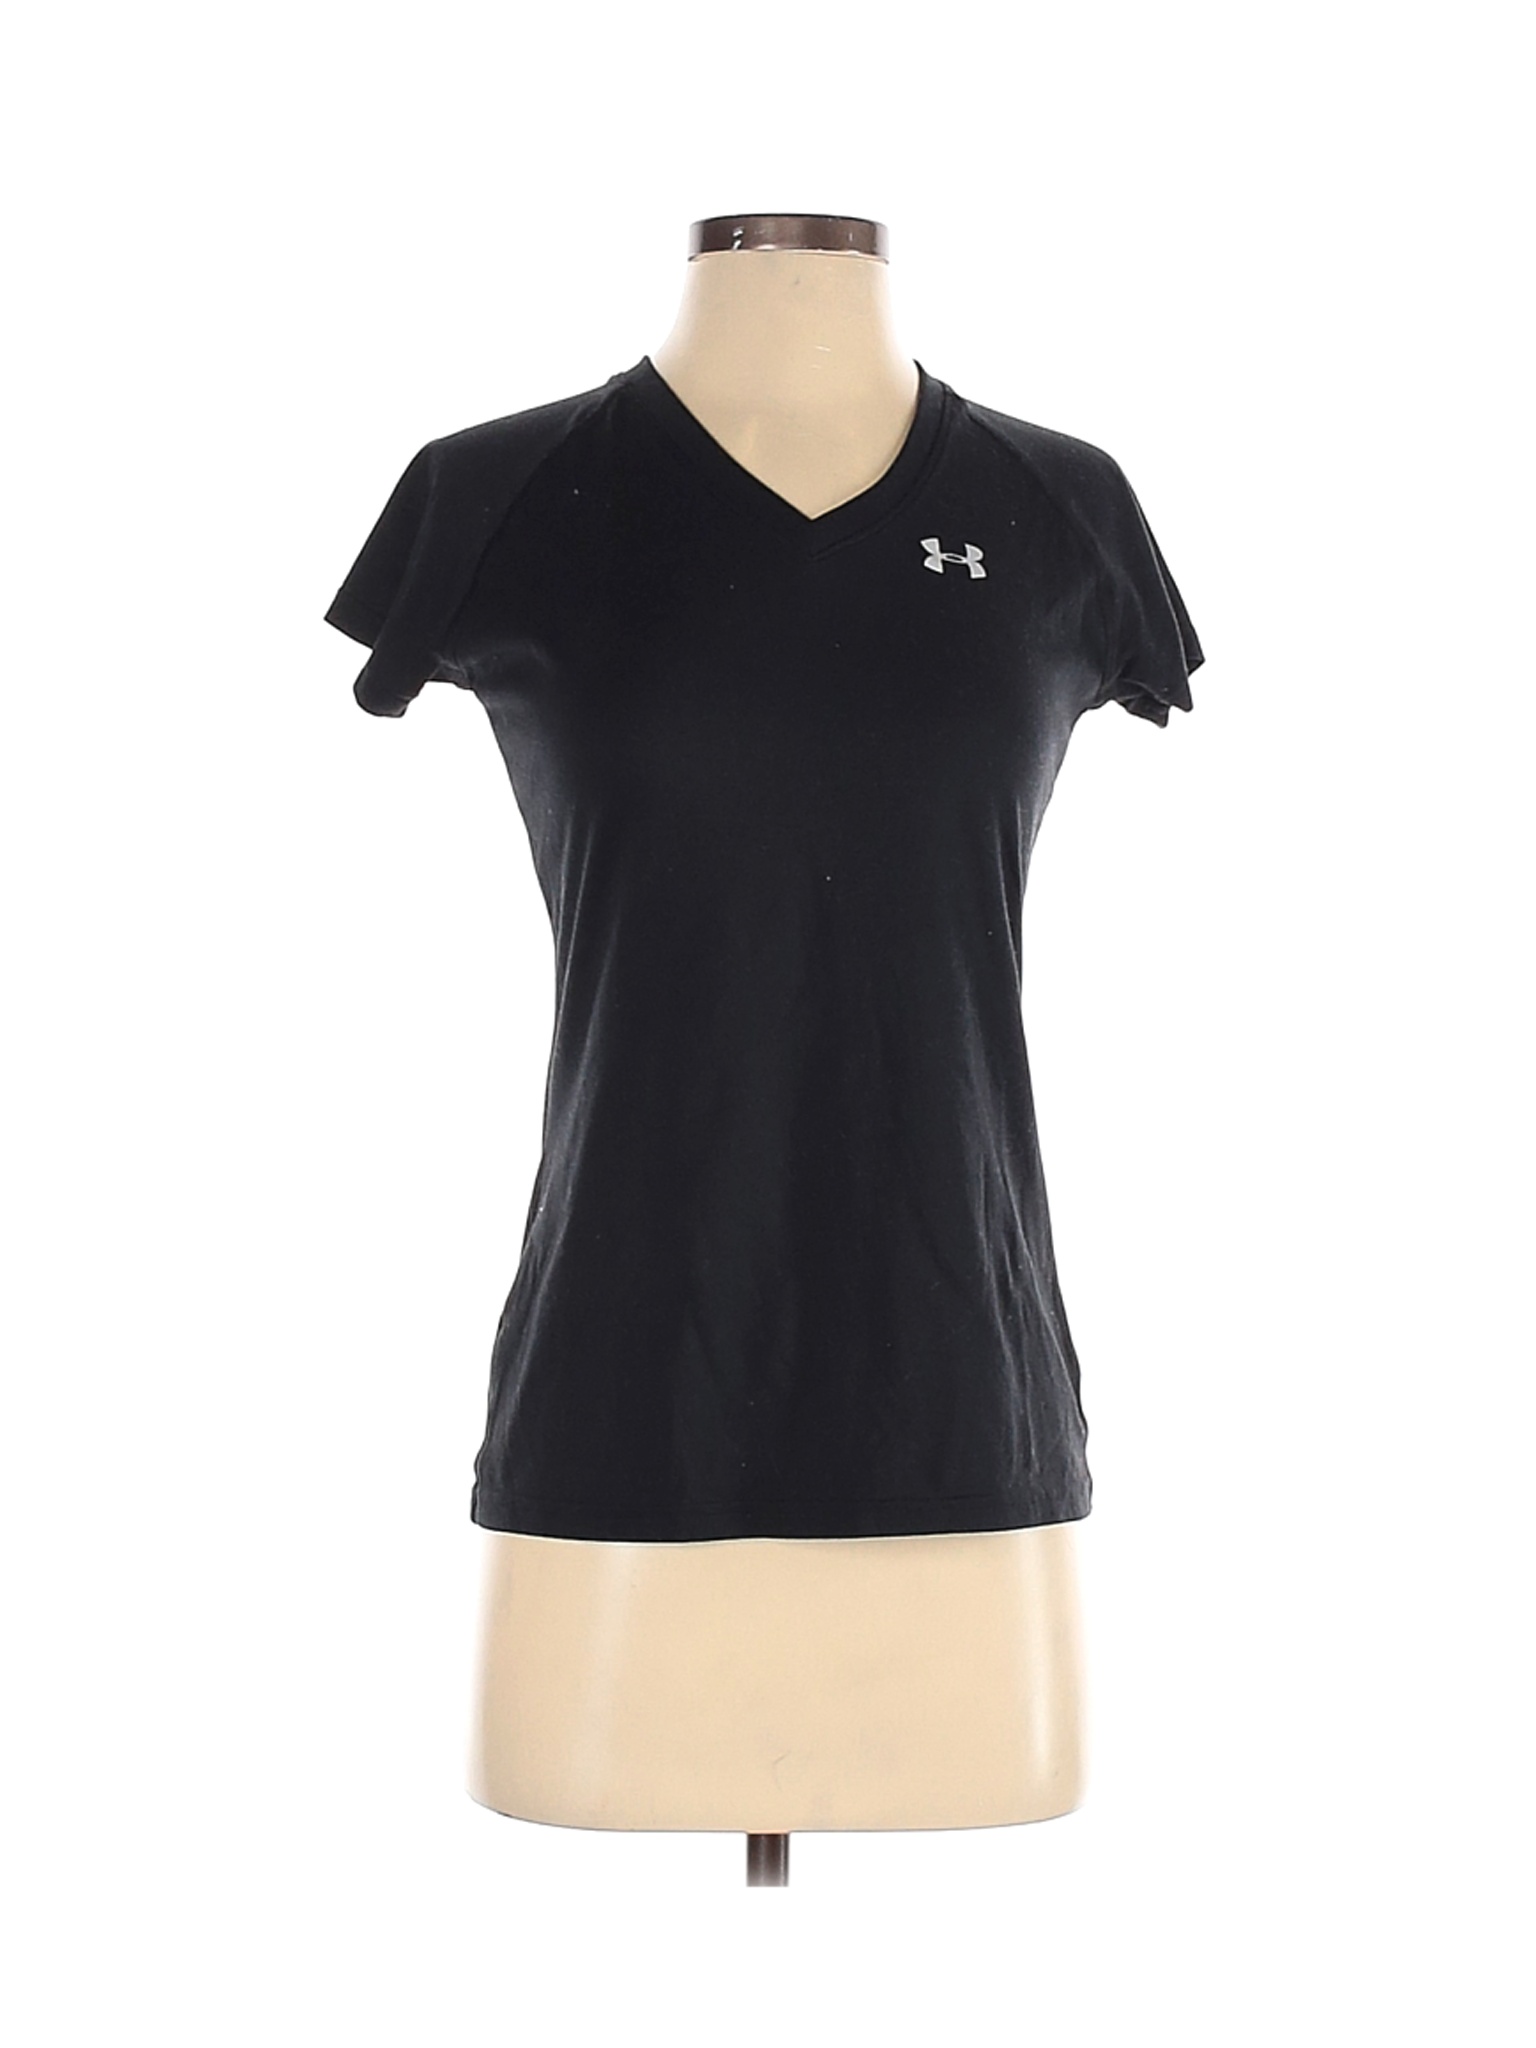 Under Armour Women Black Active T-Shirt XS | eBay